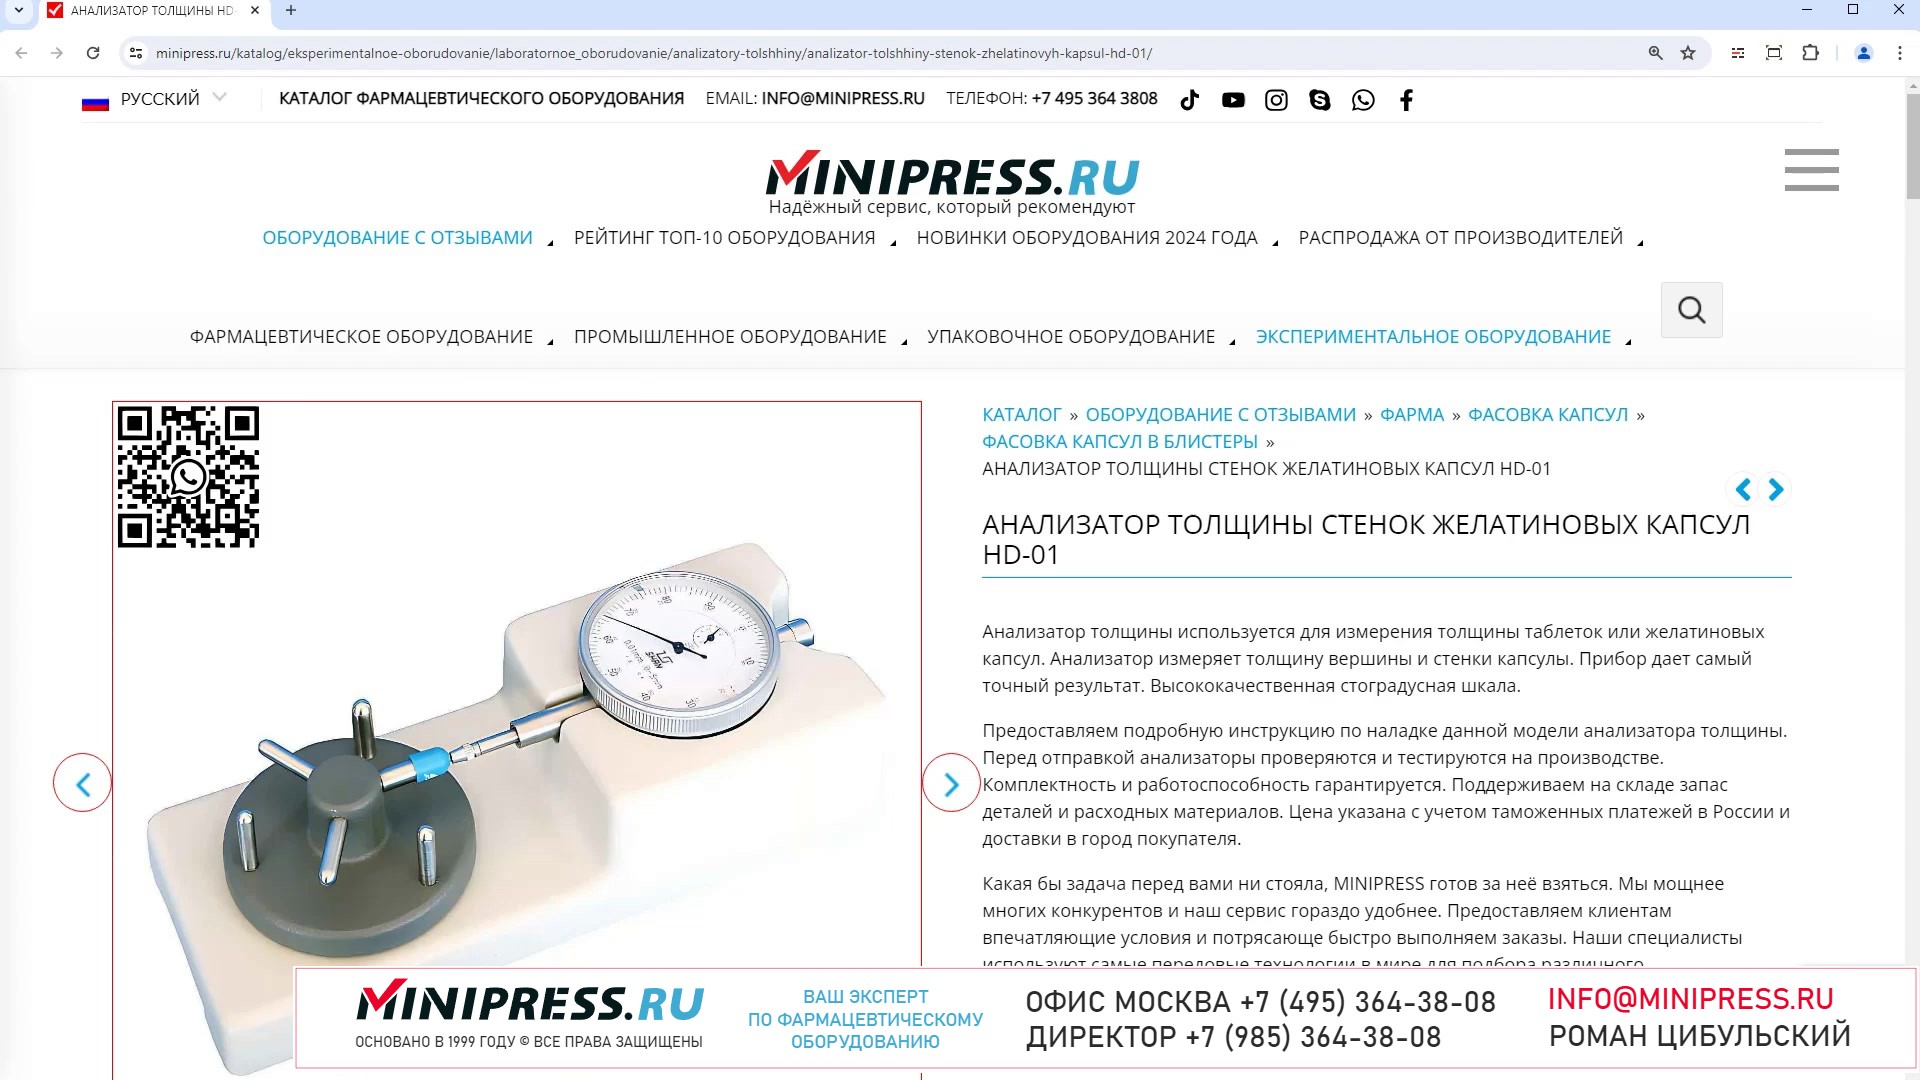 Minipress.ru Анализатор толщины стенок желатиновых капсул HD-01